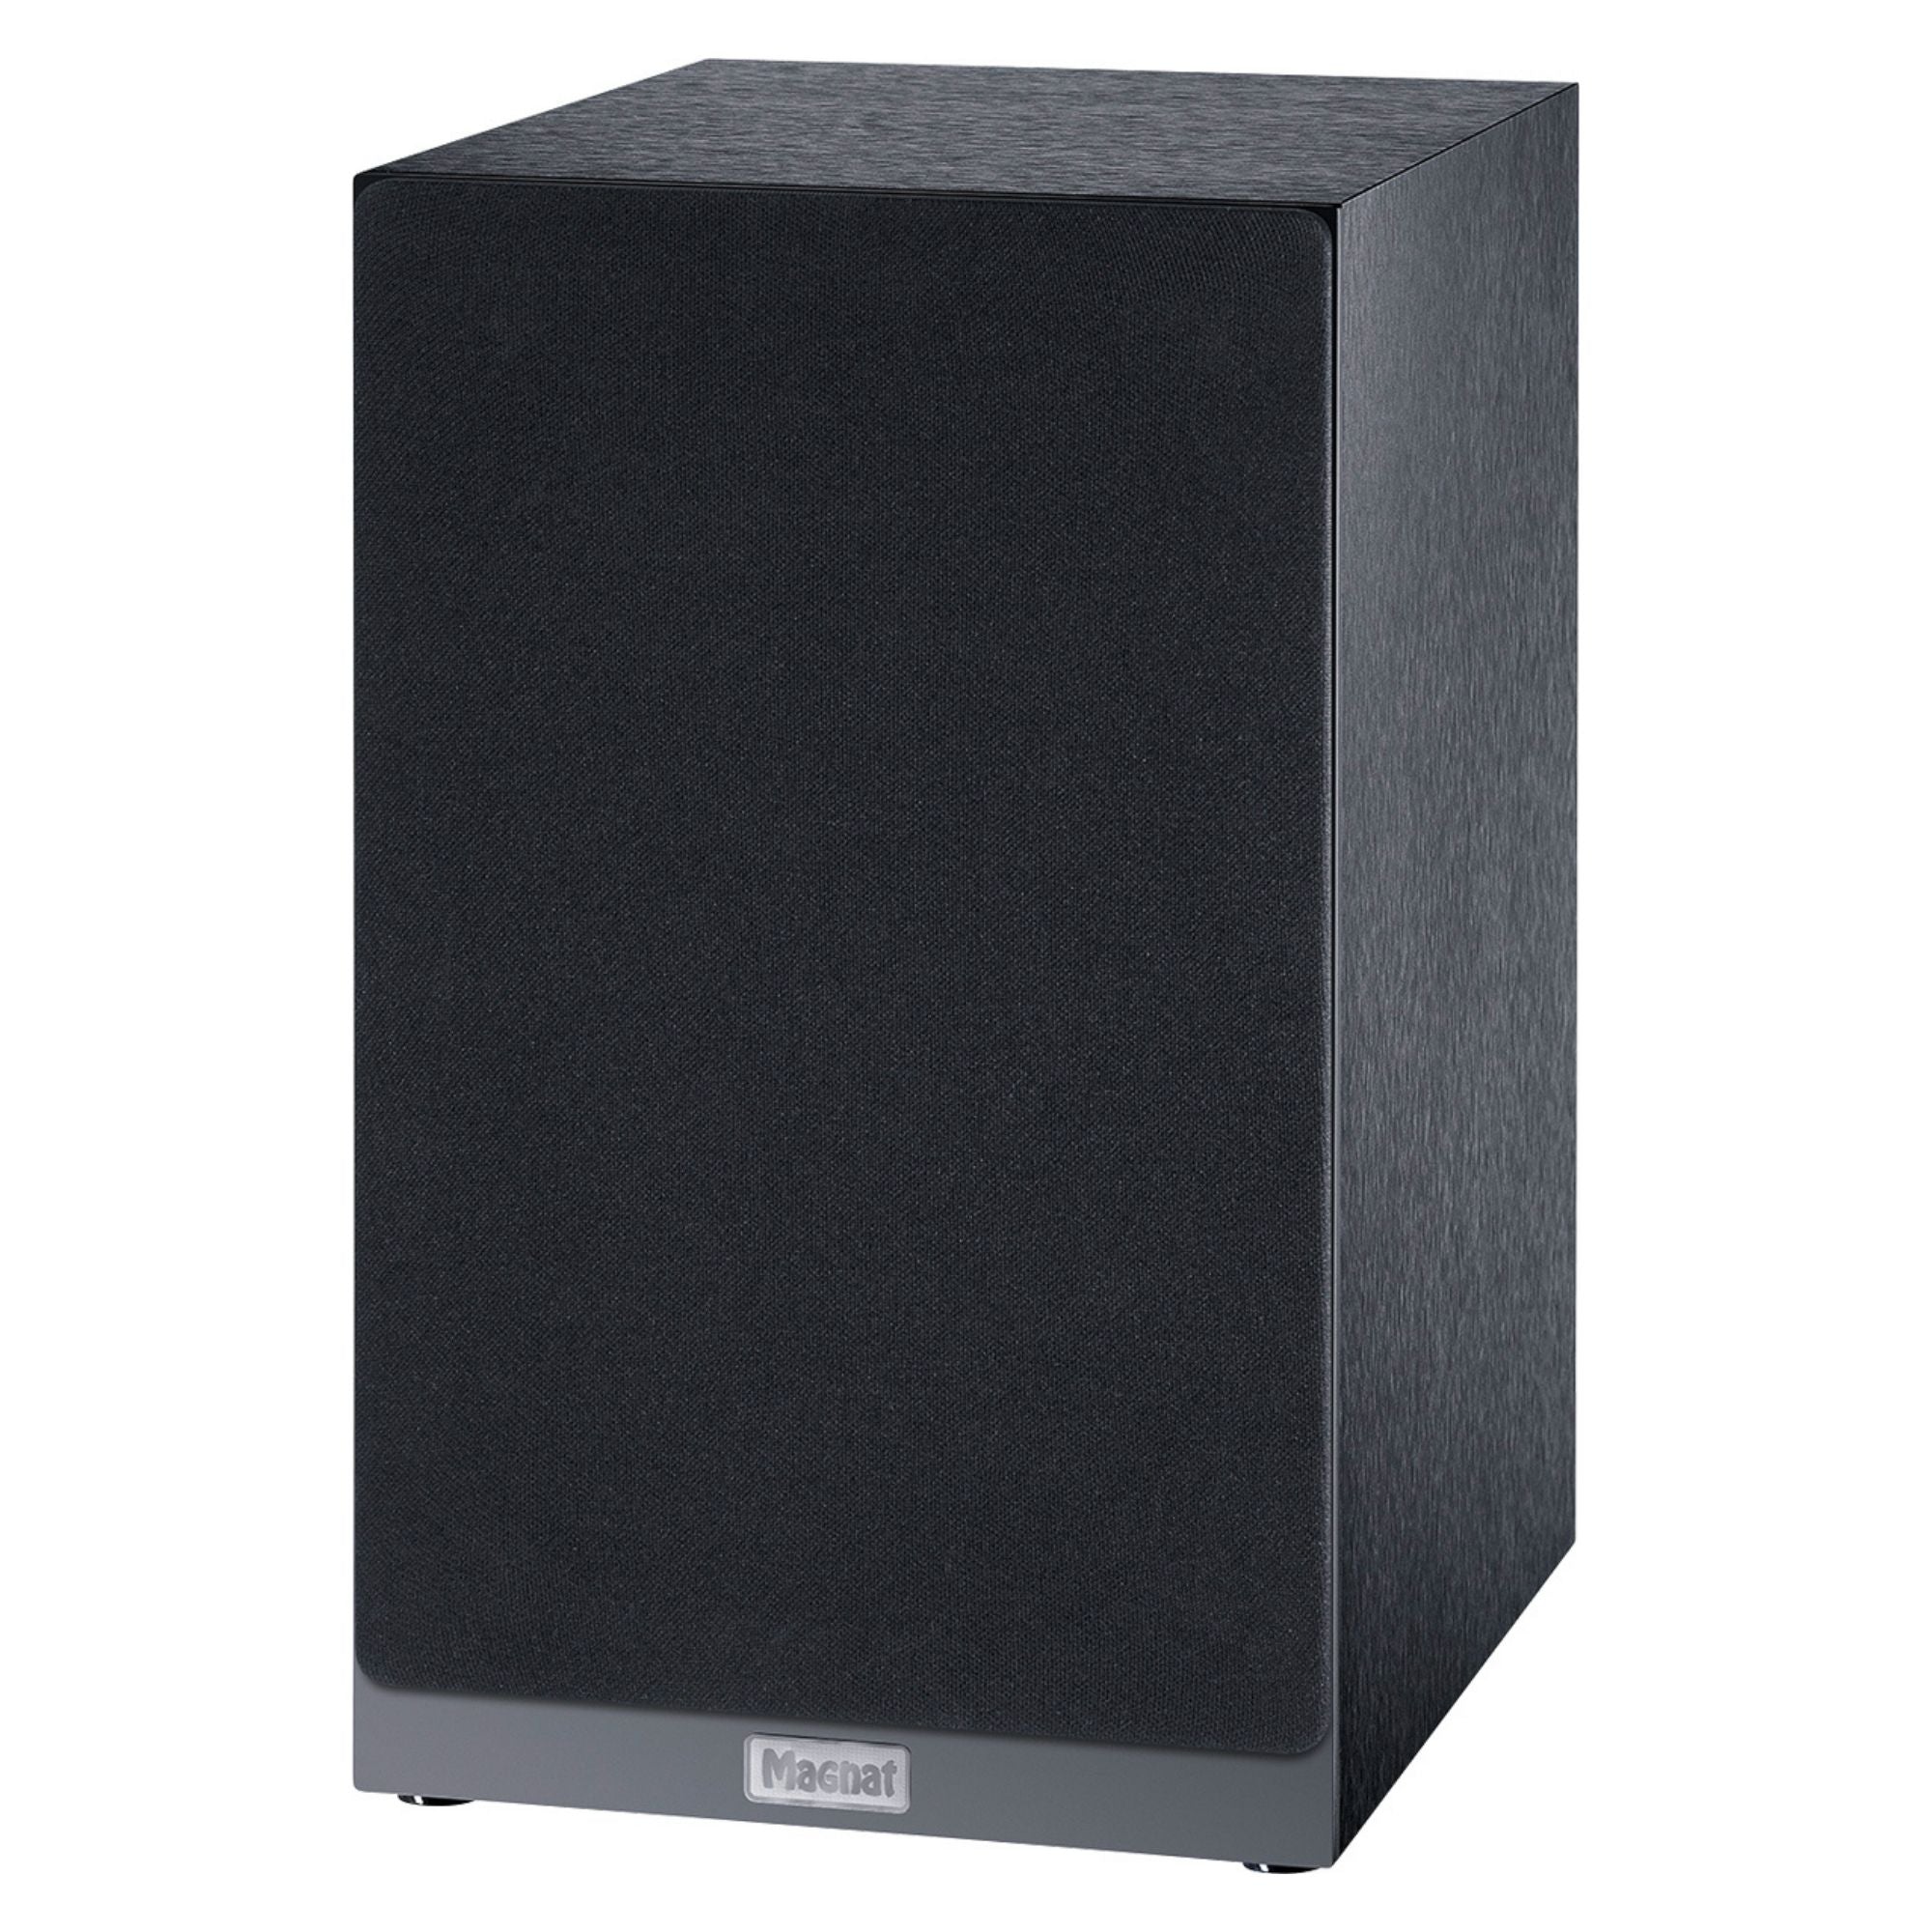 Magnat Multi Monitor 220 - Active Bookshelf Speaker - Pair - AVStore